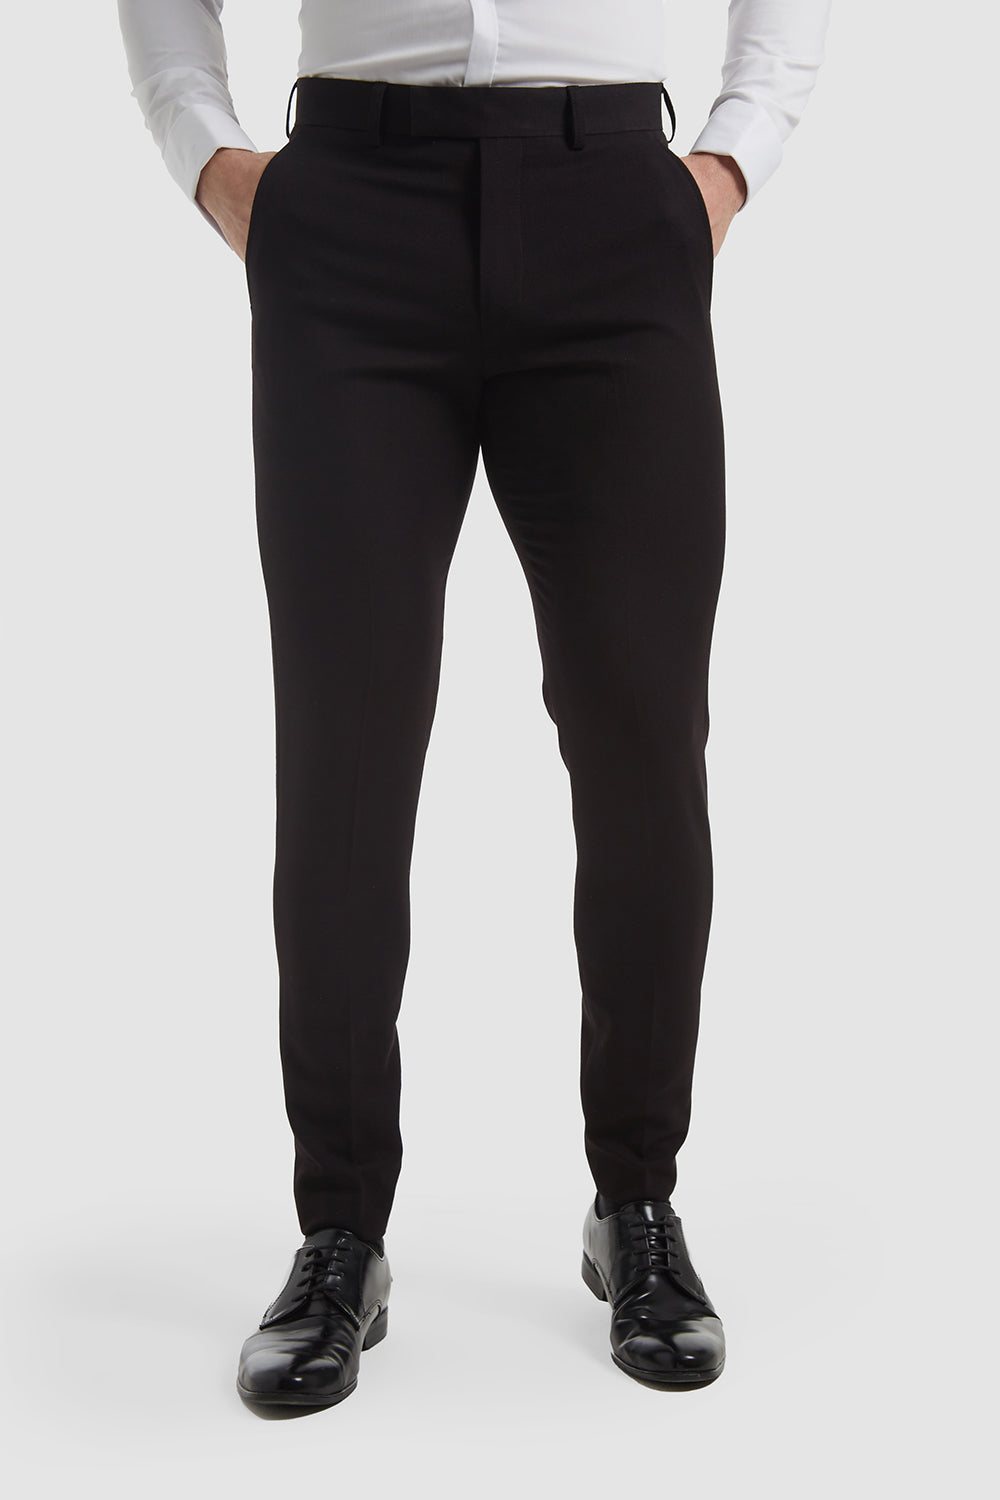 Buy Men Black Check Slim Fit Formal Trousers Online - 779647 | Peter England